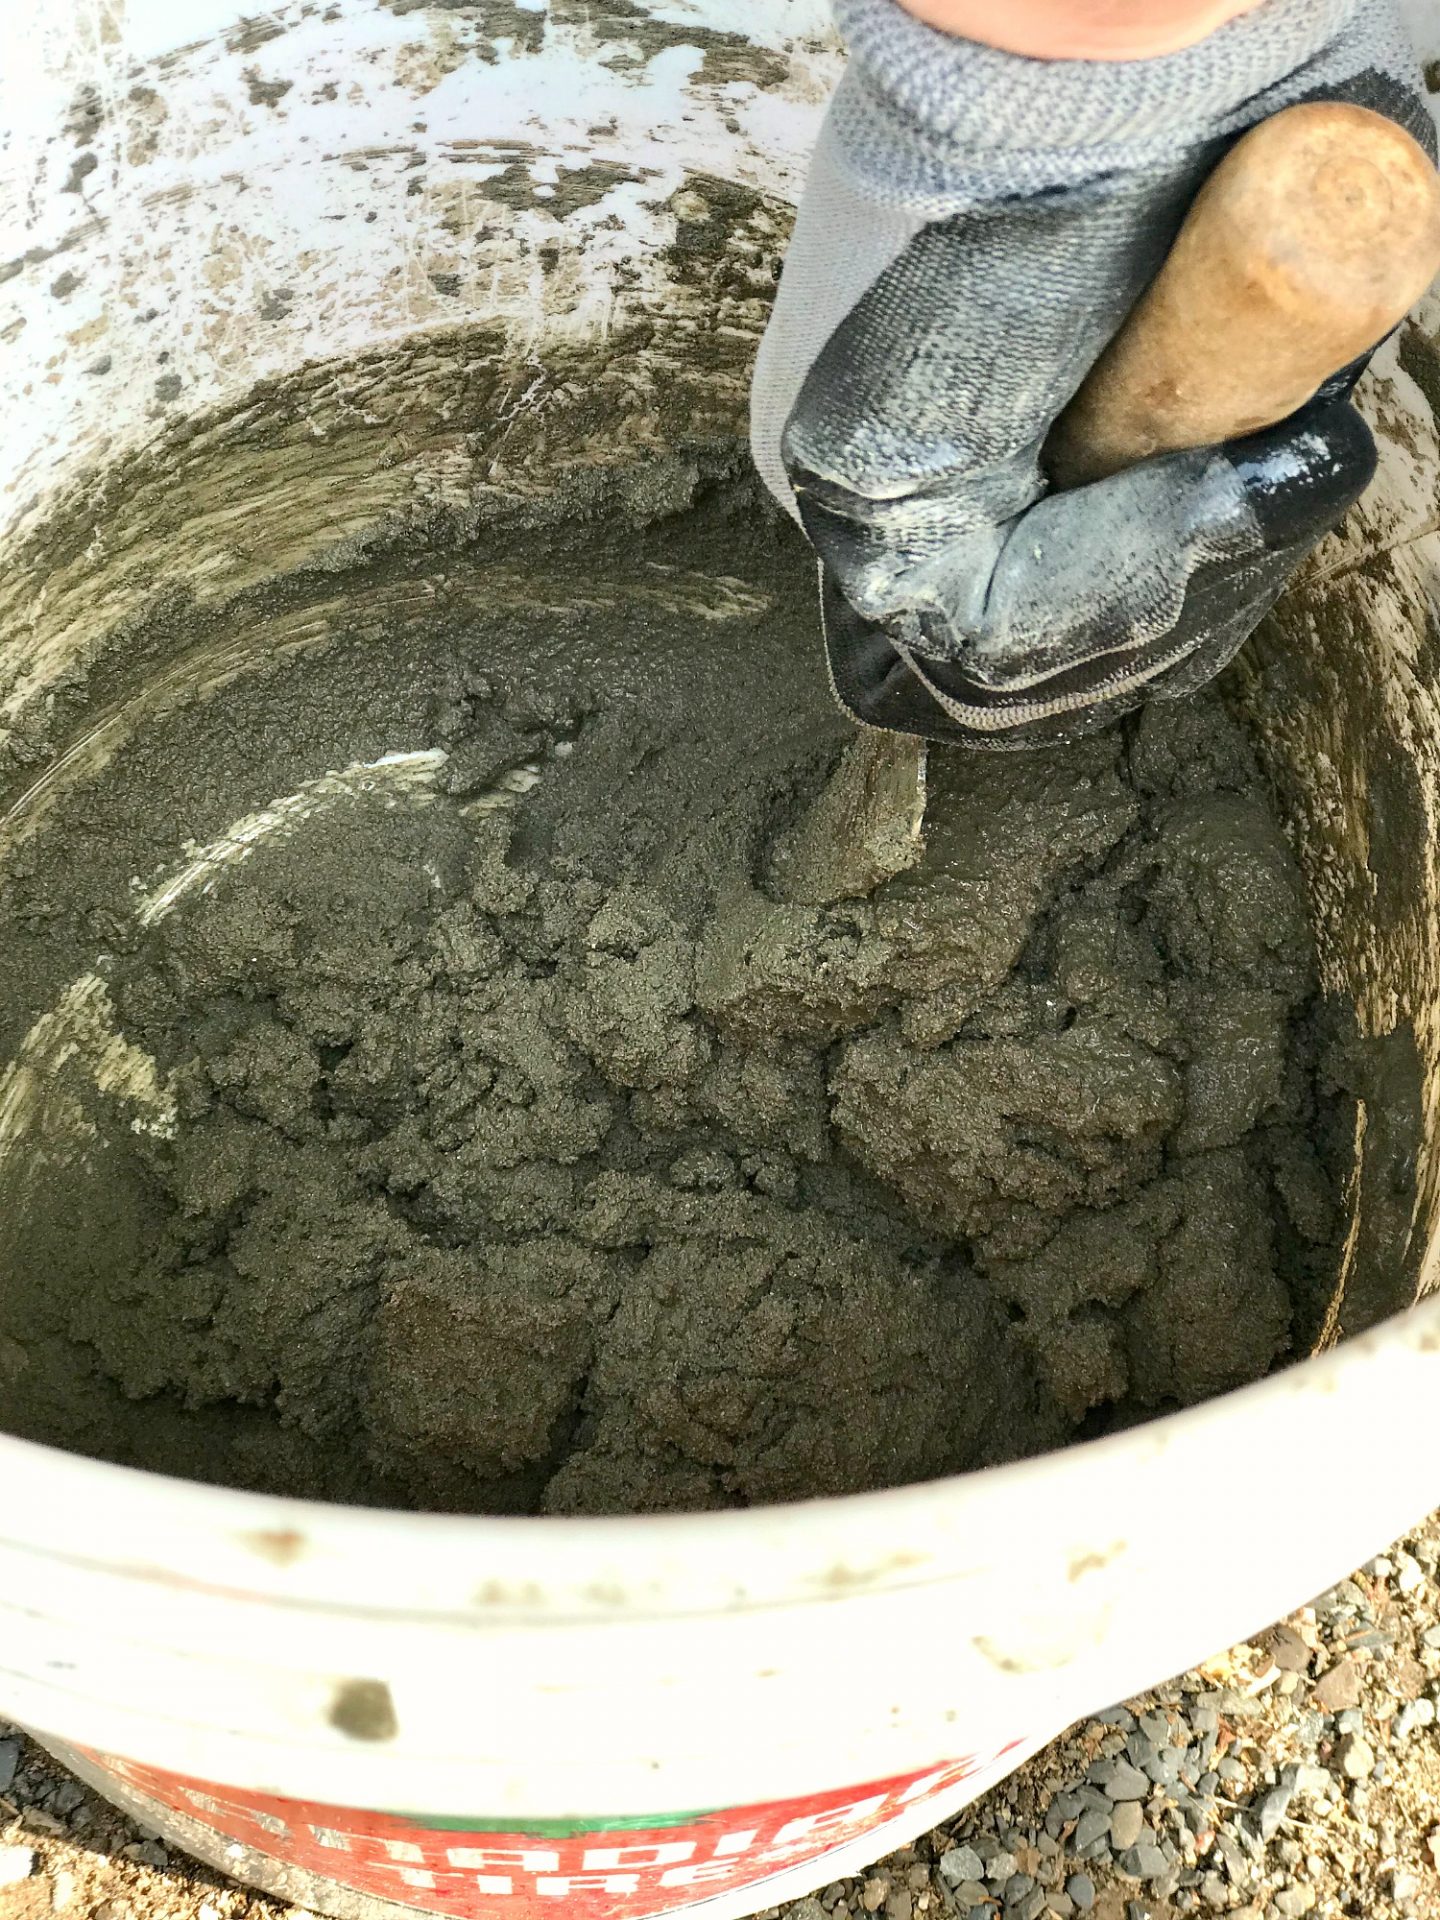 Consistency for Concrete Bowl